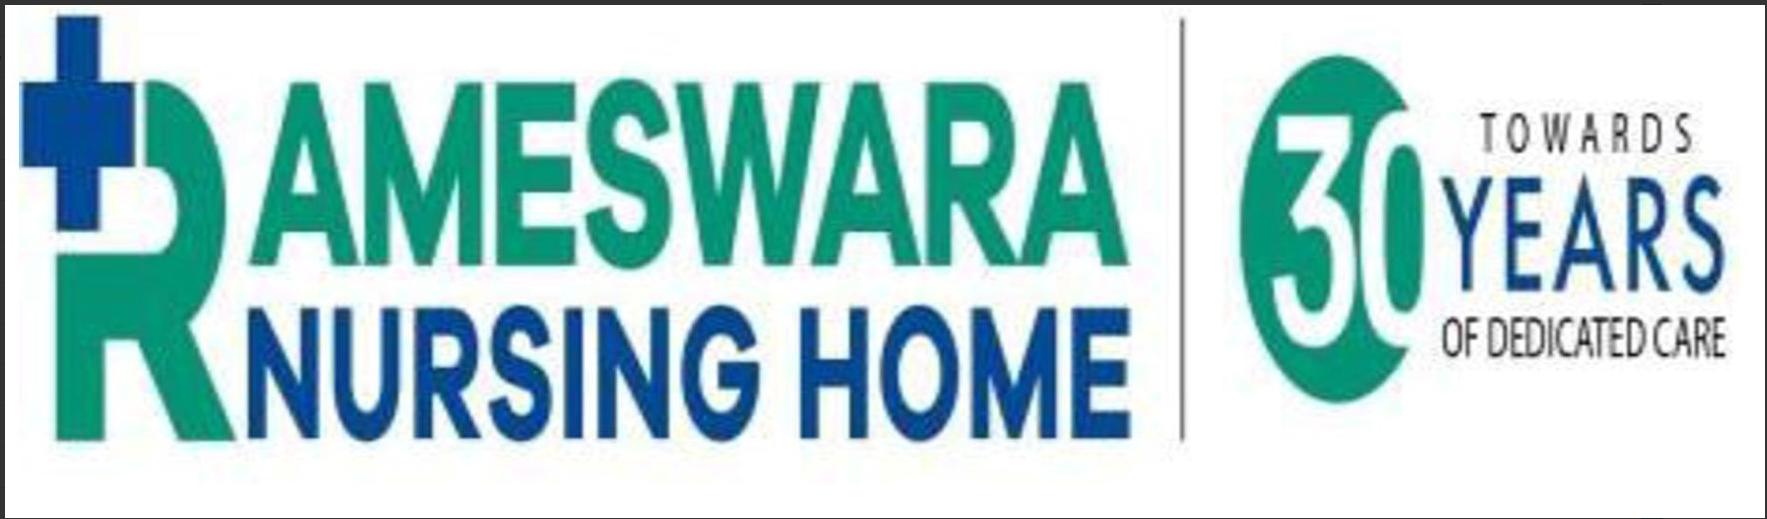 Rameswara Nursing Home - Ultadanga, kolkata